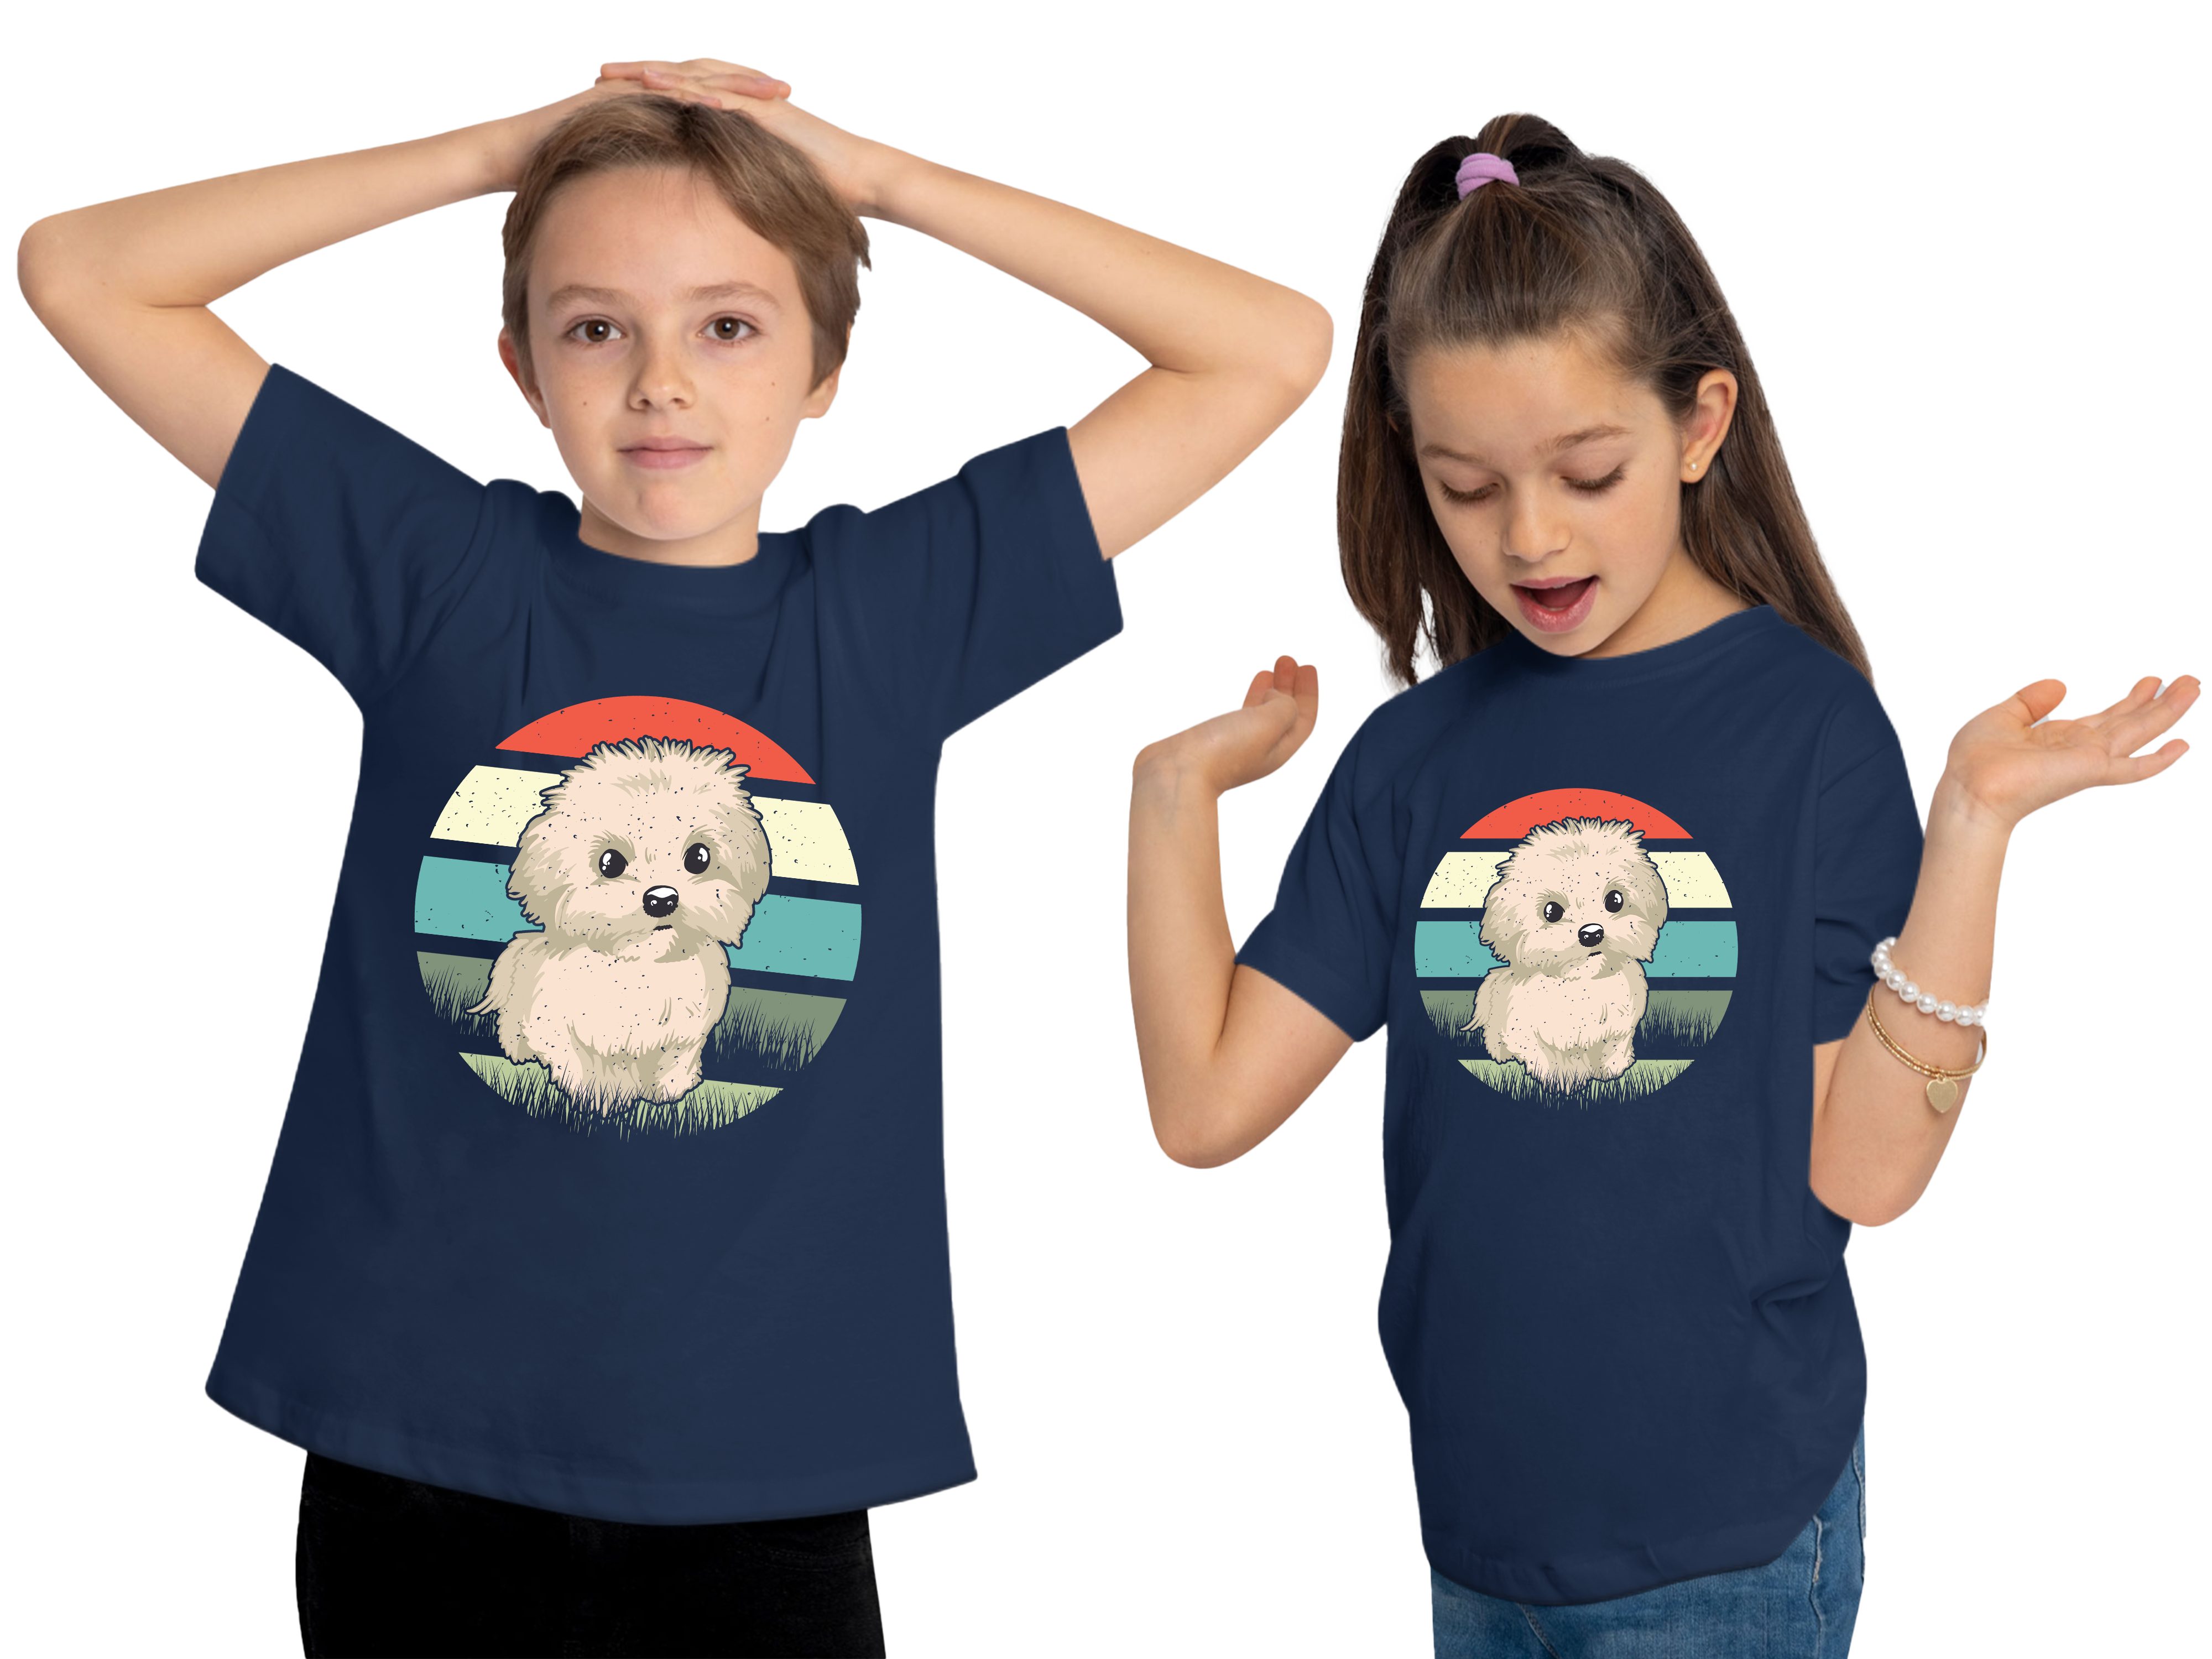 Print-Shirt Aufdruck, navy i242 Malteser Retro Kinder T-Shirt mit blau - Welpen bedruckt MyDesign24 Baumwollshirt Hunde